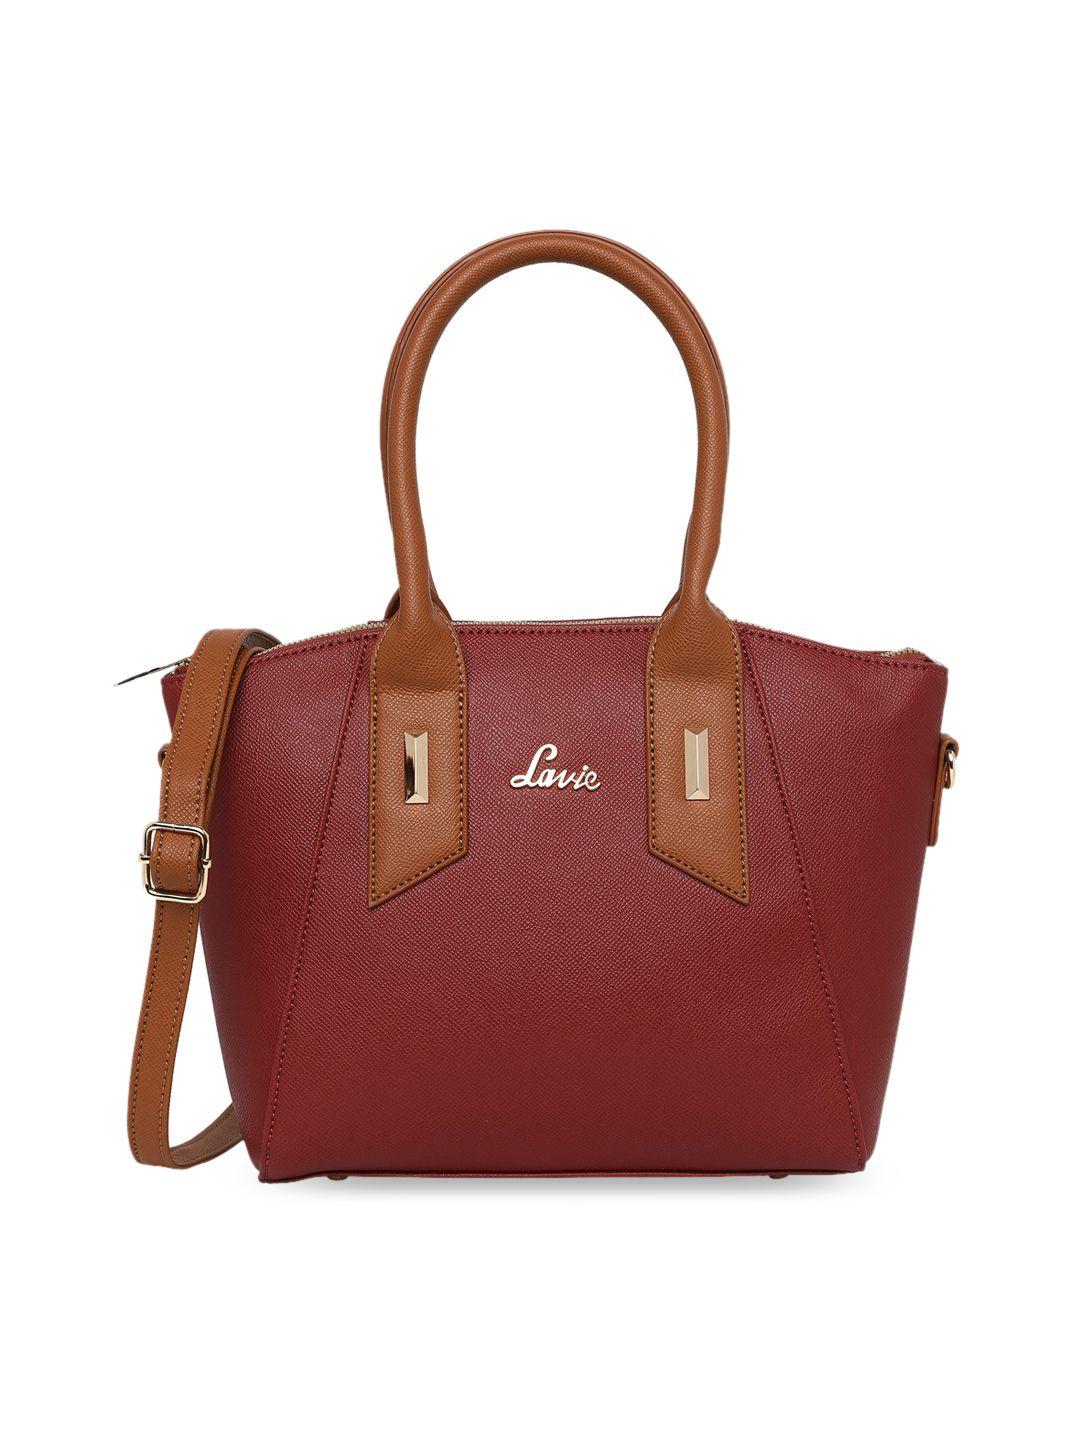 lavie red structured handheld bag